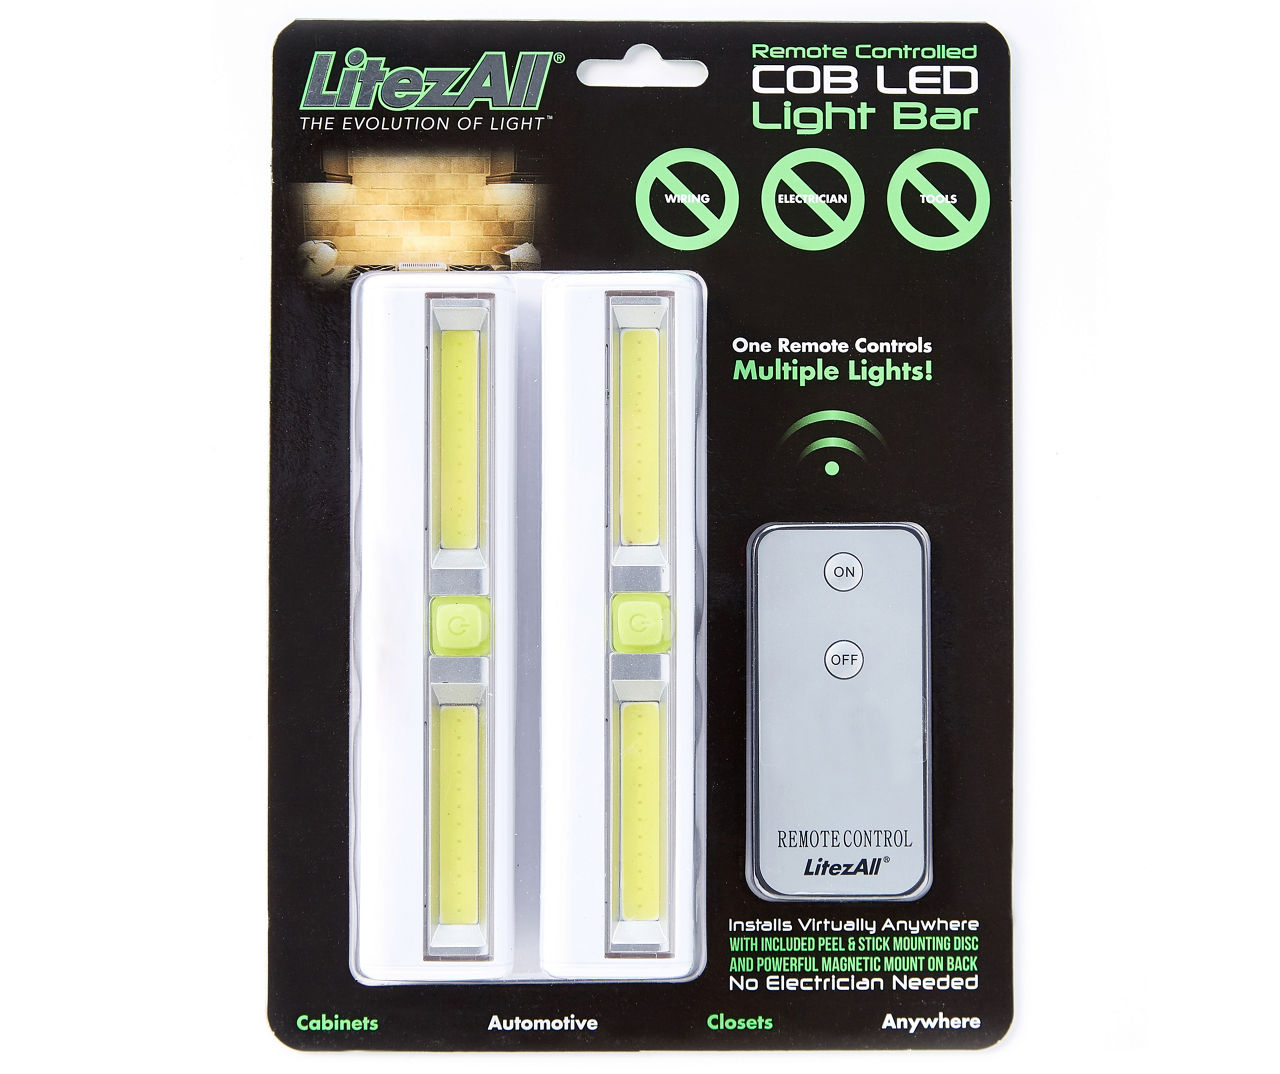 Promier Products Inc - COB LED Light Switch